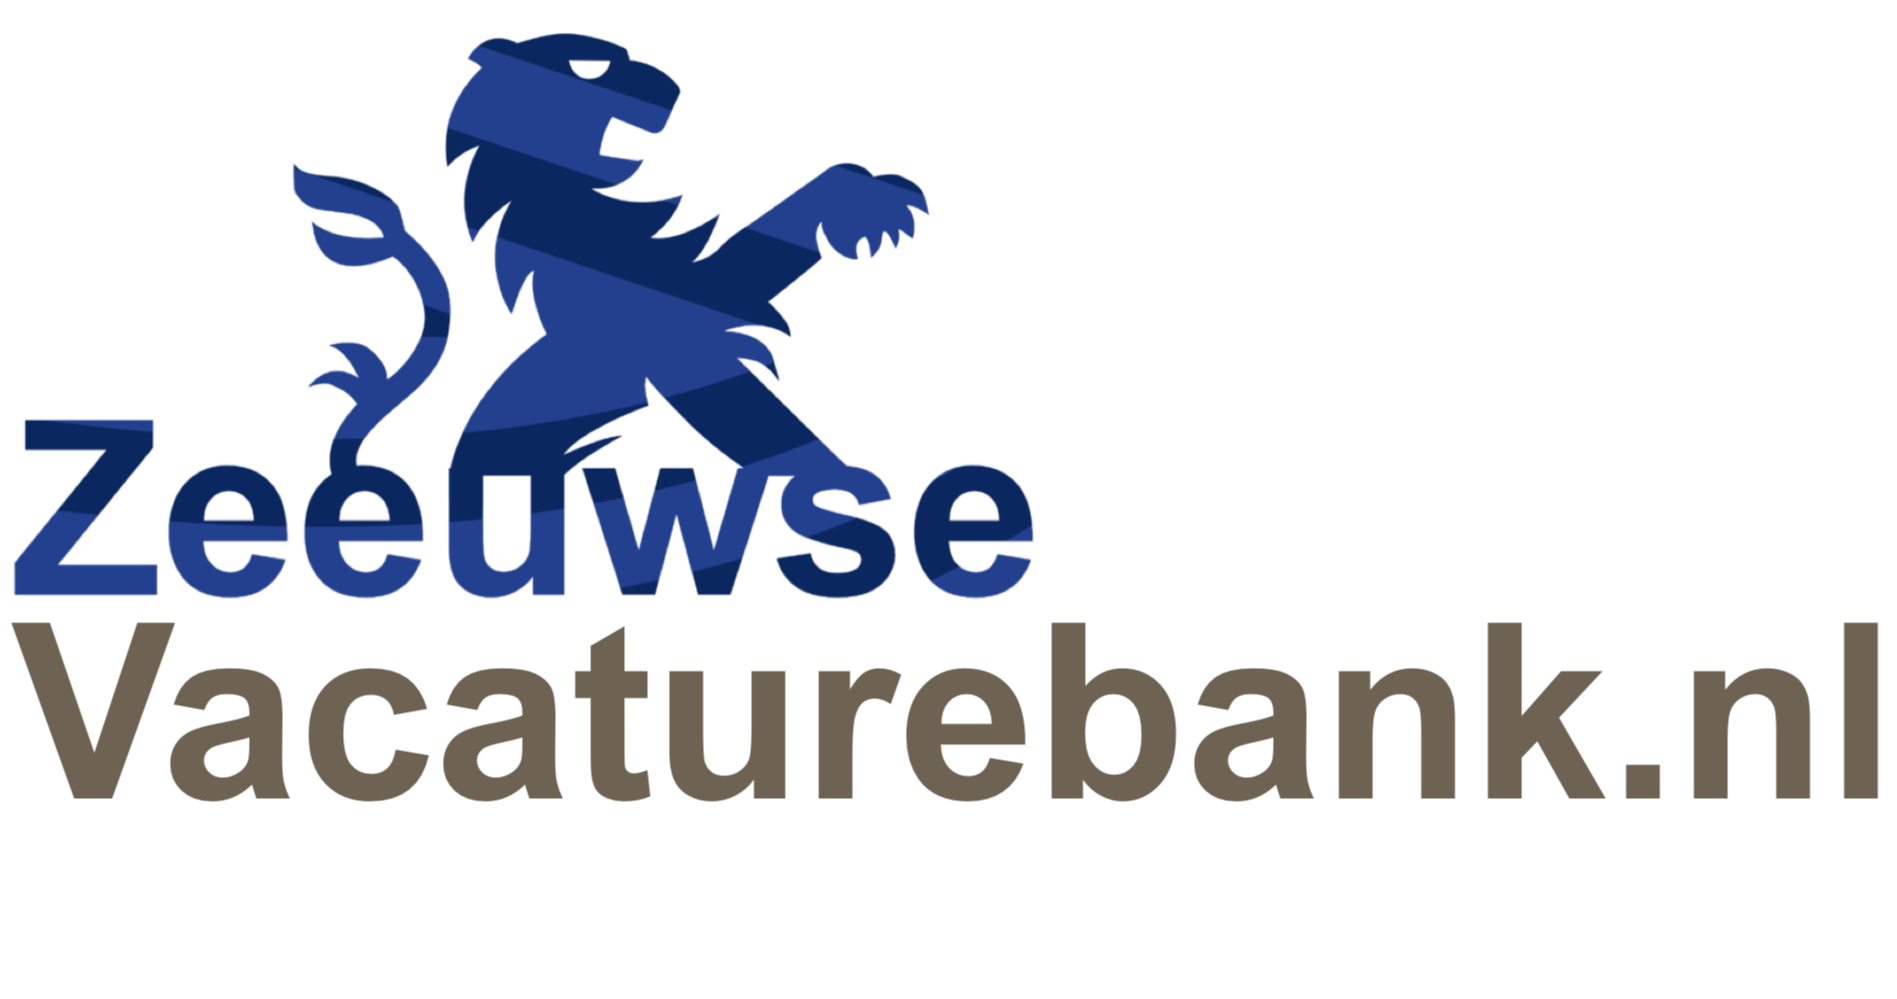 ZeeuwseVacaturebank logo vrij